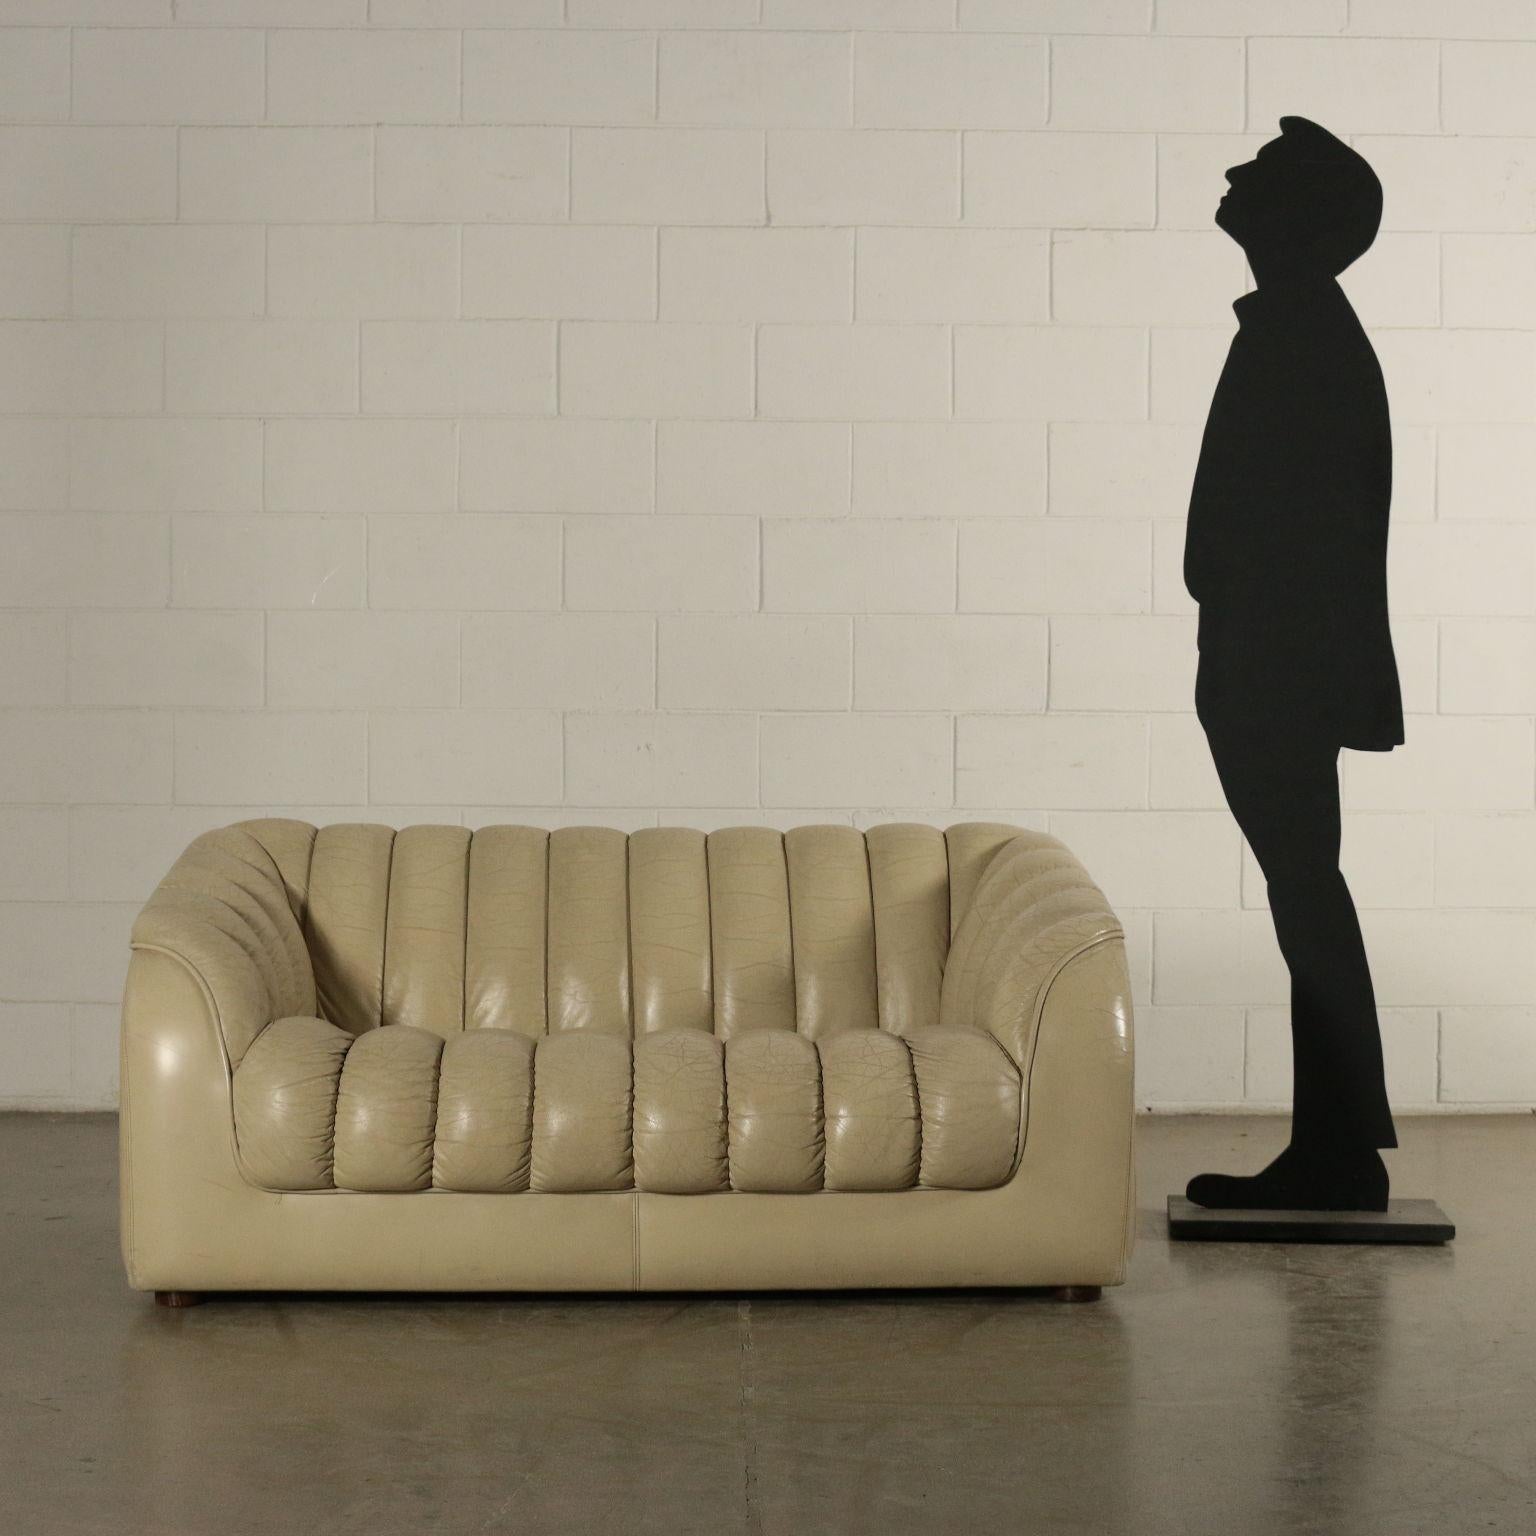 Two-seat sofa, foam padding, leatherette upholstery.